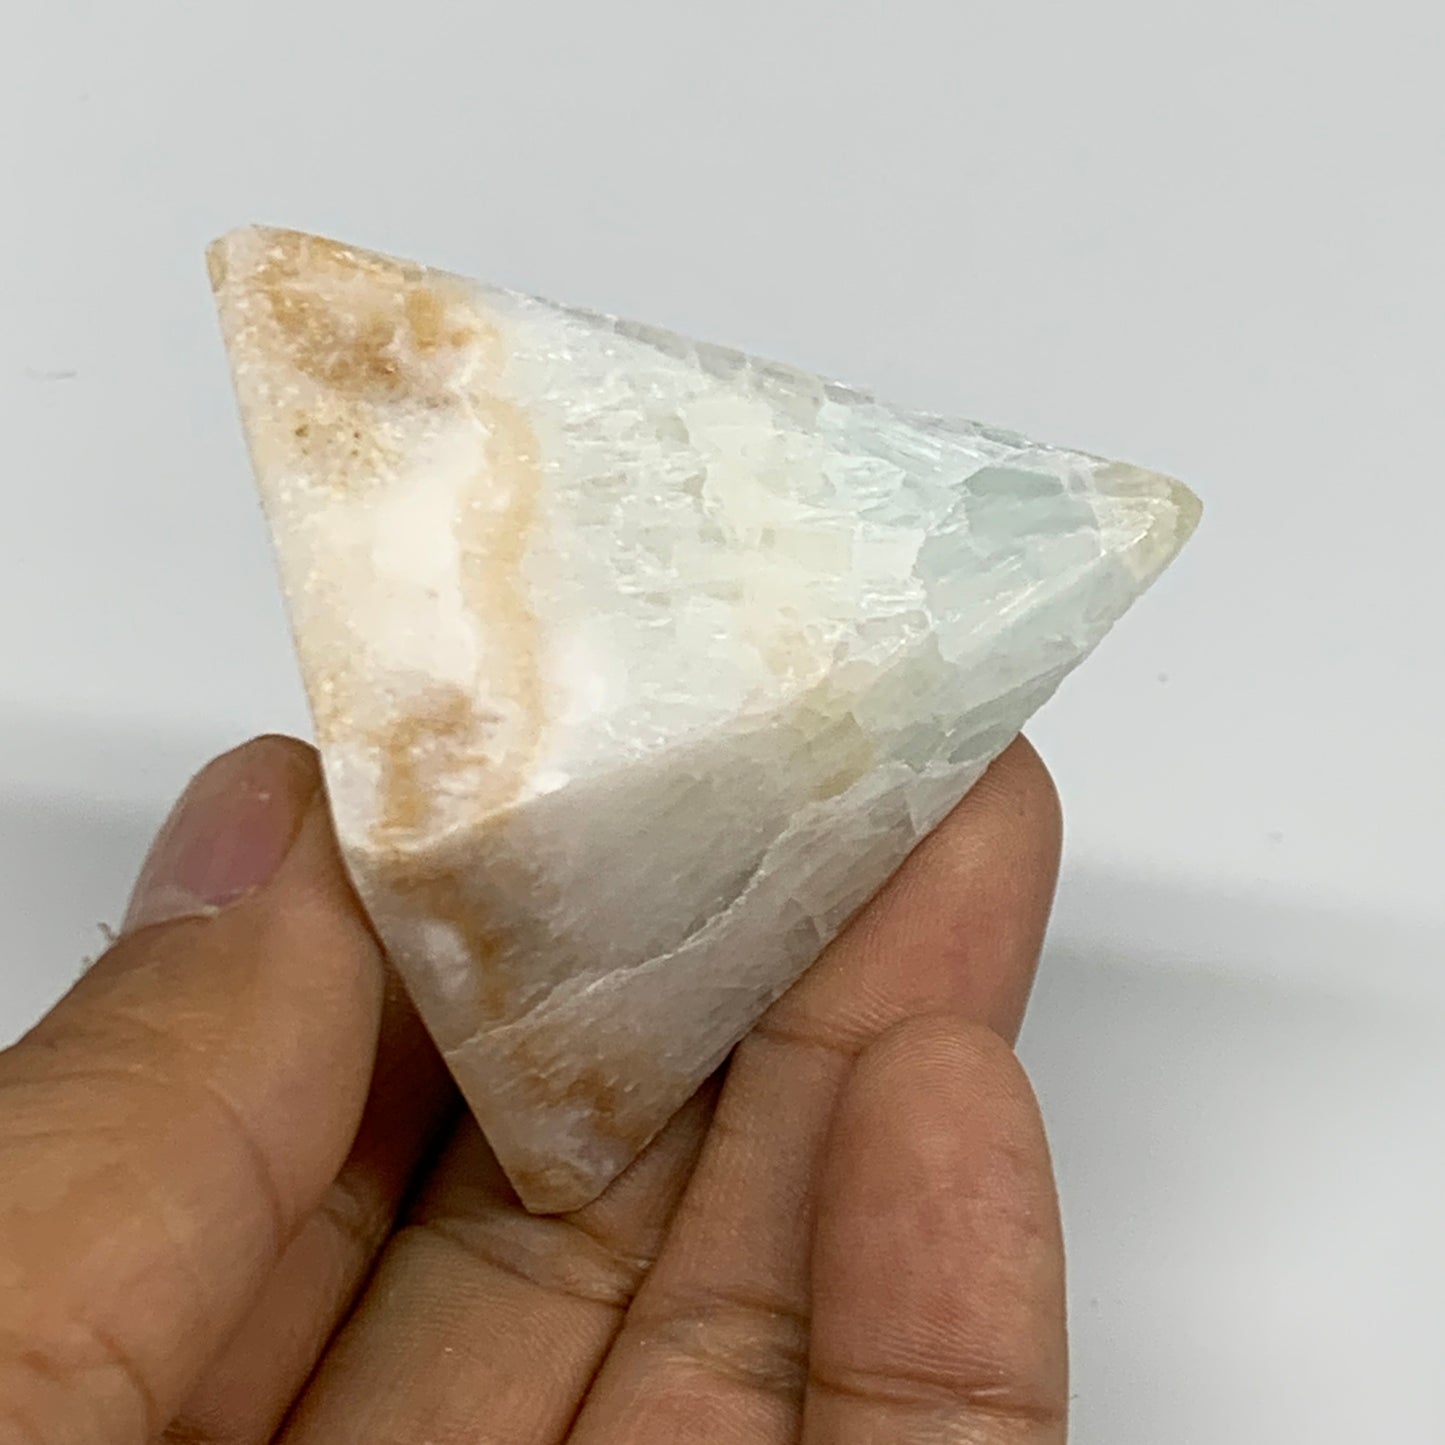 114.8g, 2"x1.7"x1.8", Caribbean Calcite Pyramid Gemstone, Crystal, B31792